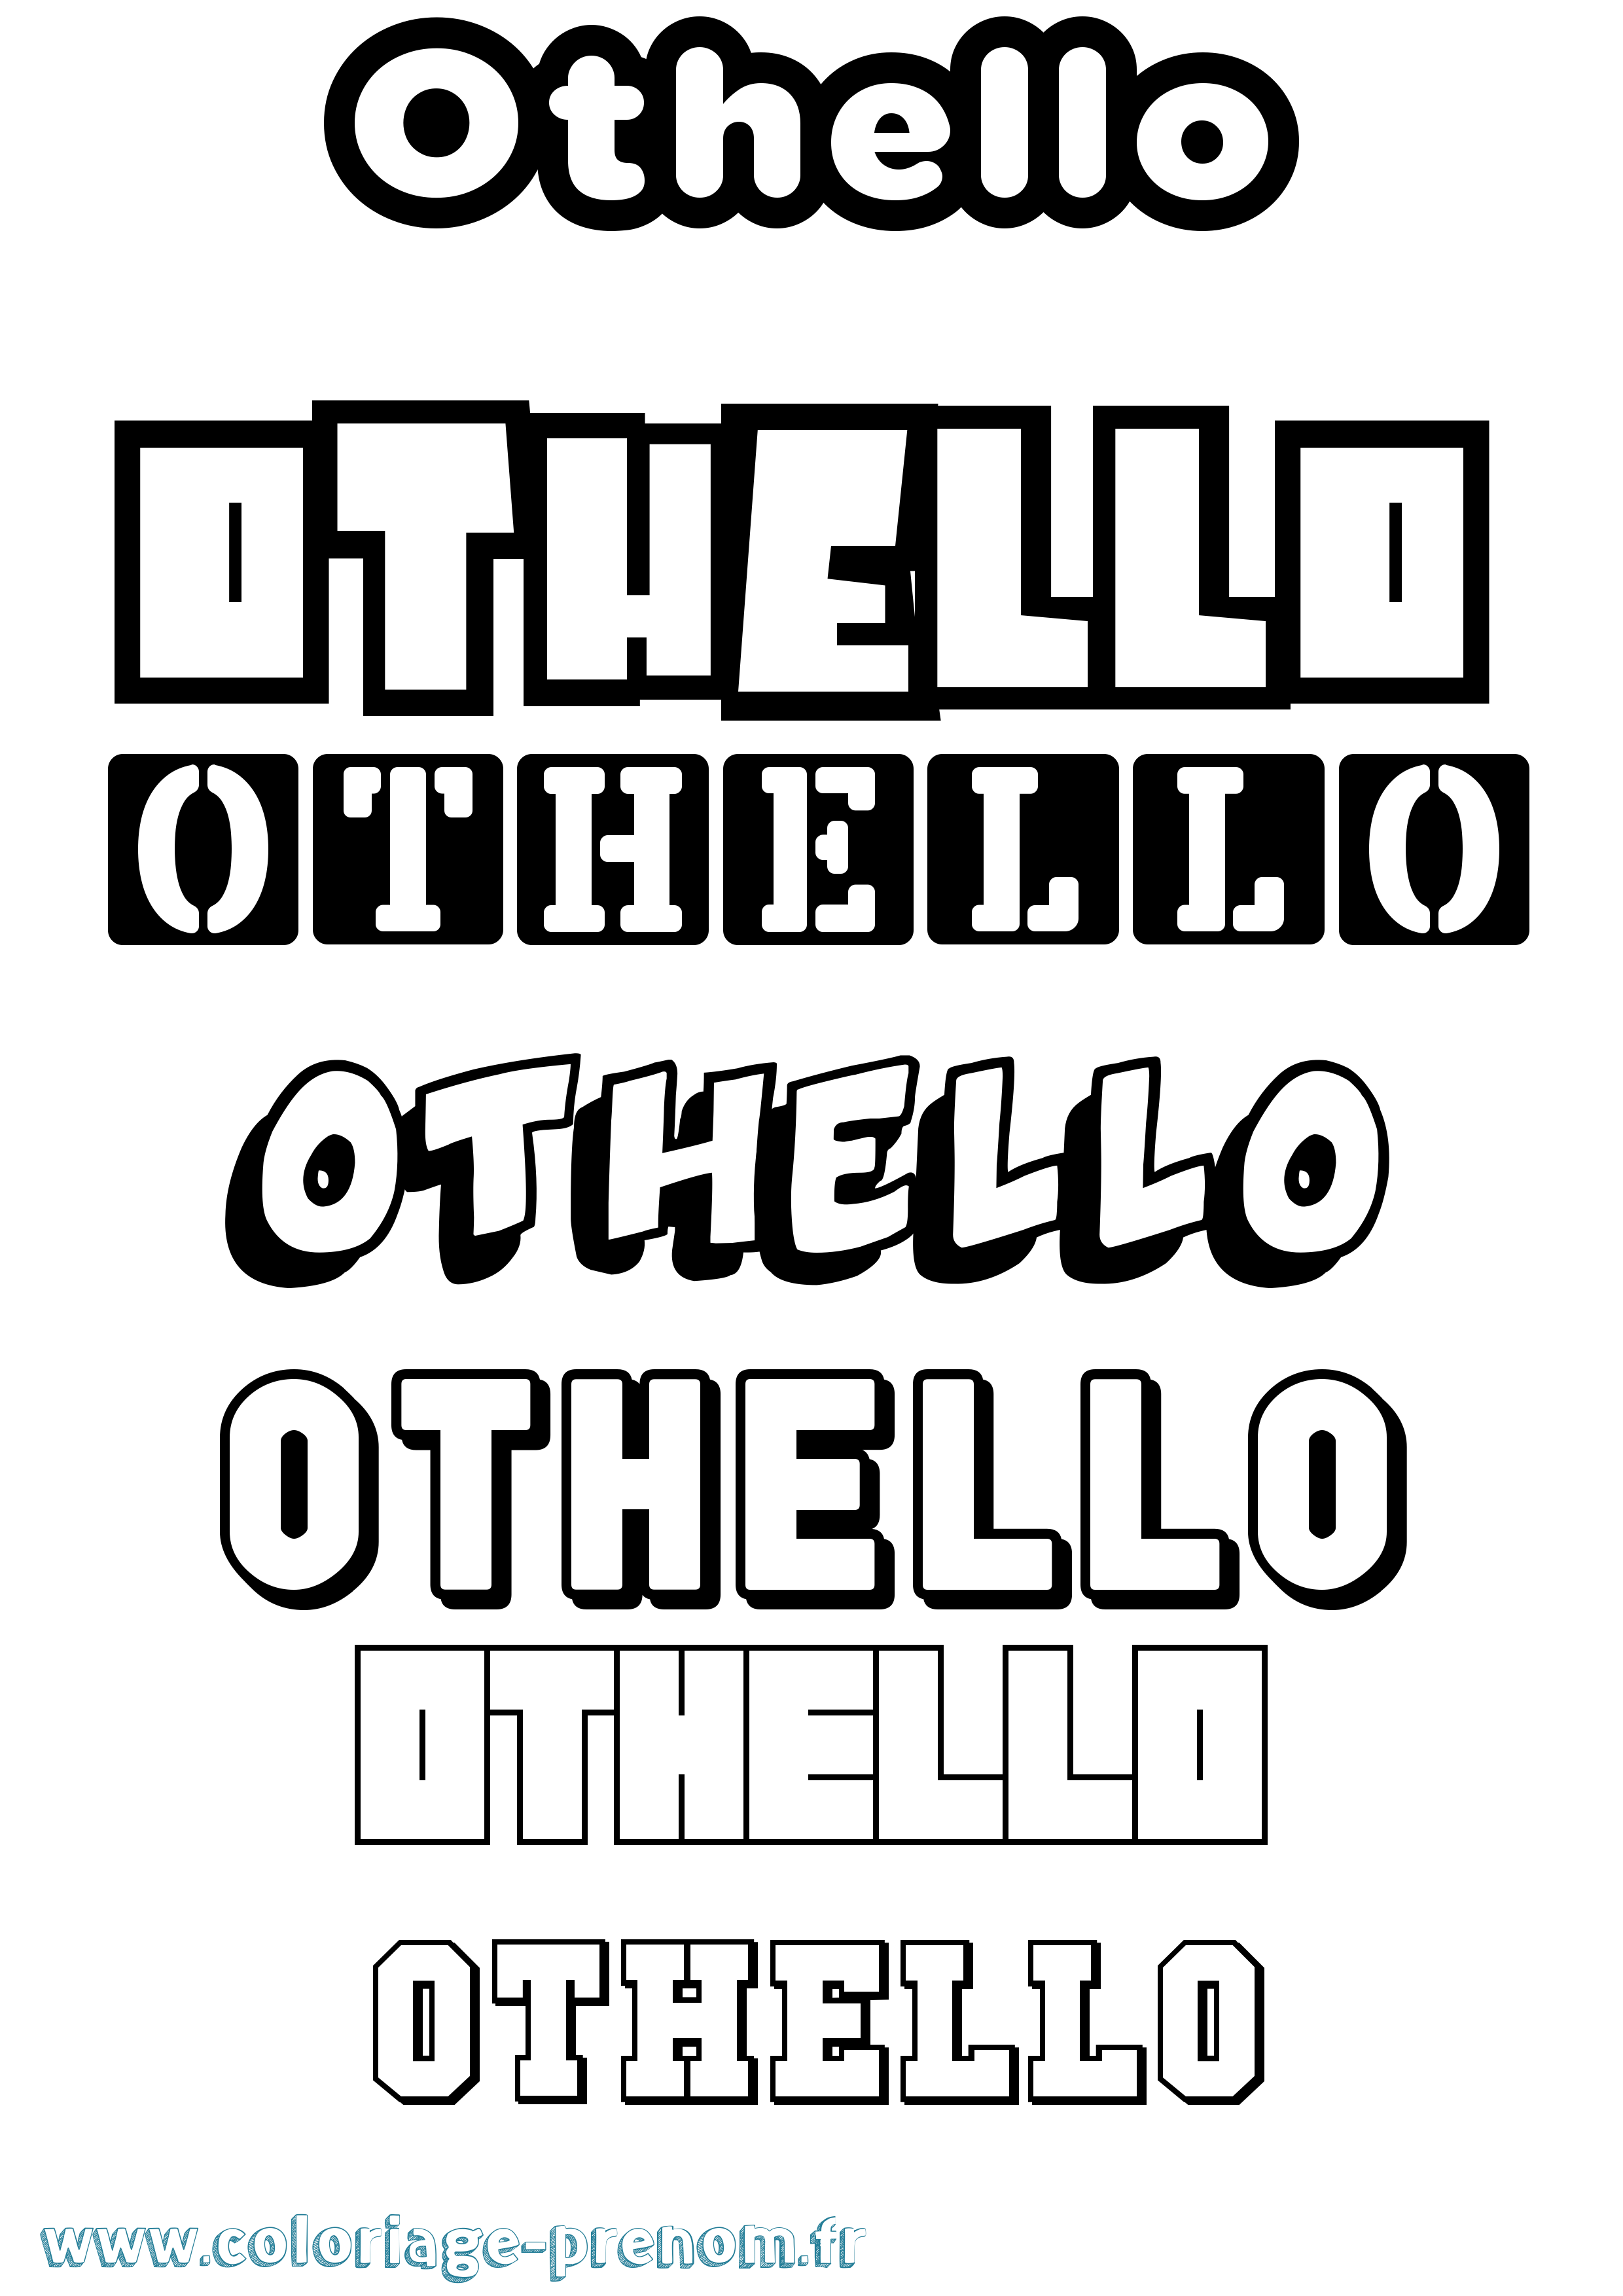 Coloriage prénom Othello Simple